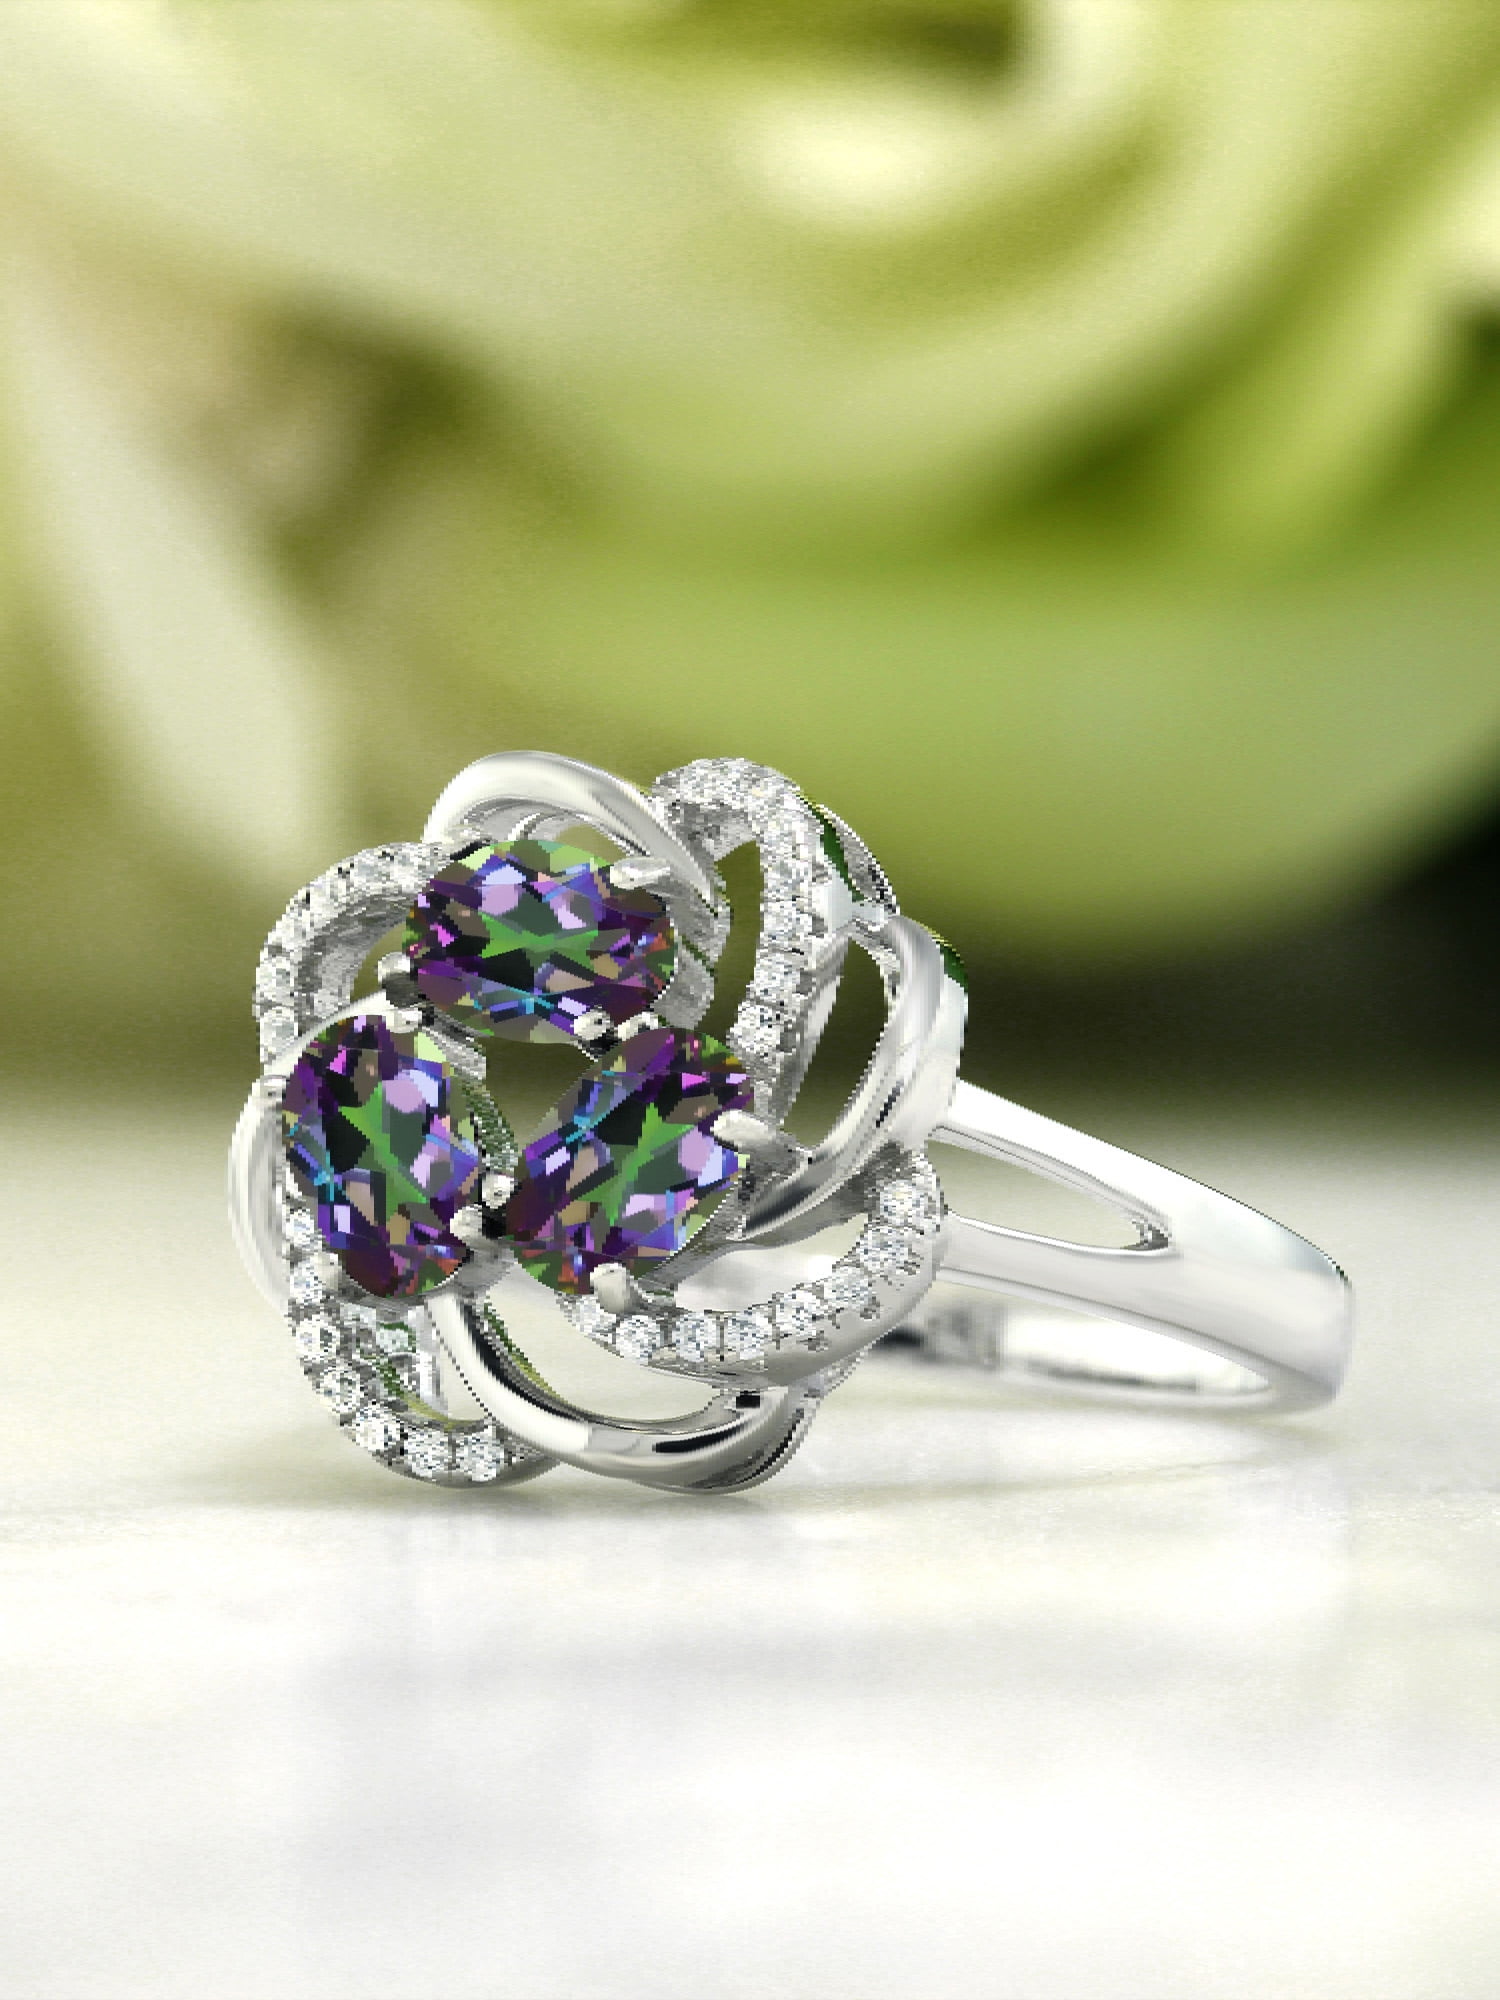 Imperial Topaz & Diamond Ring - Dianna Rae Jewelry